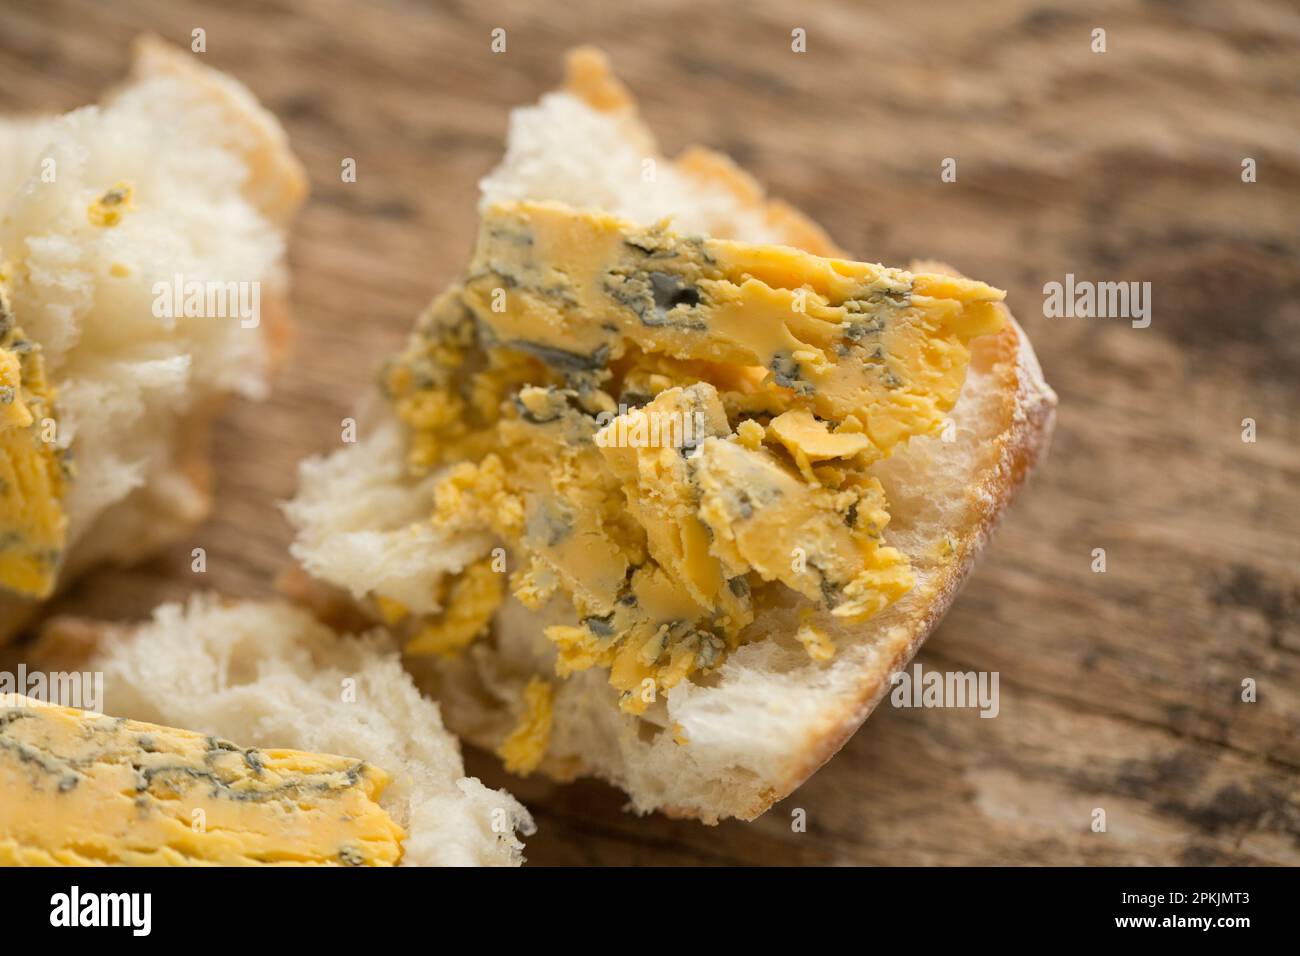 Shepherds Purse Harrogate Blue cheese on crusty bread. England UK GB Stock Photo